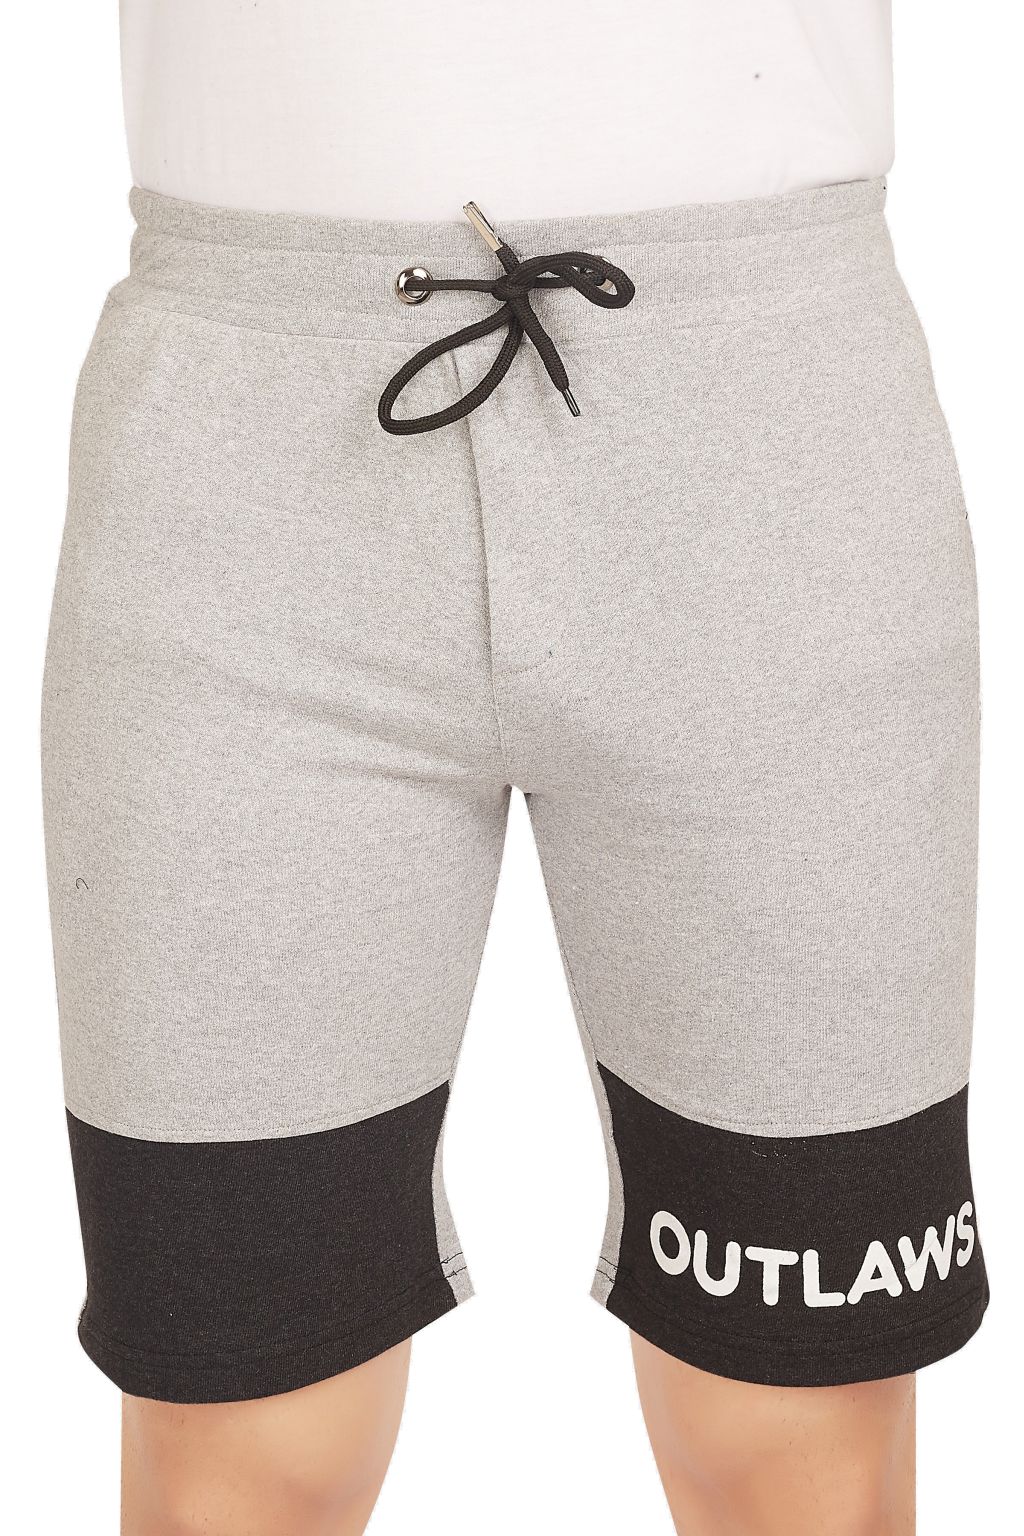 Hot Pants, Those Subversive 1970s Short Shorts, Are At It Again - WSJ